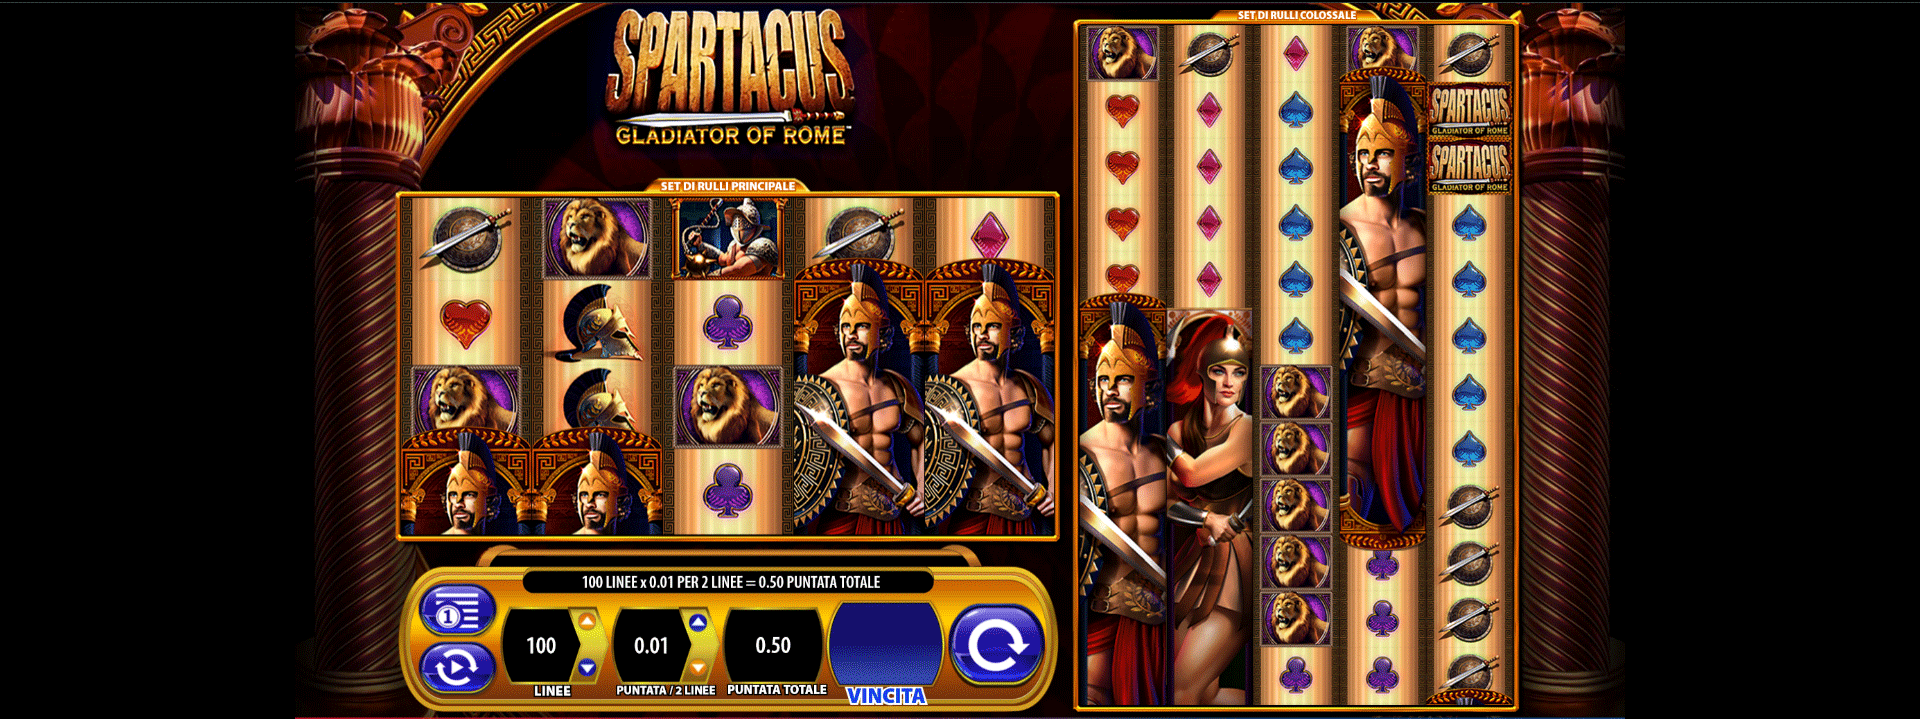 schermata slot online spartacus gladiator of rome